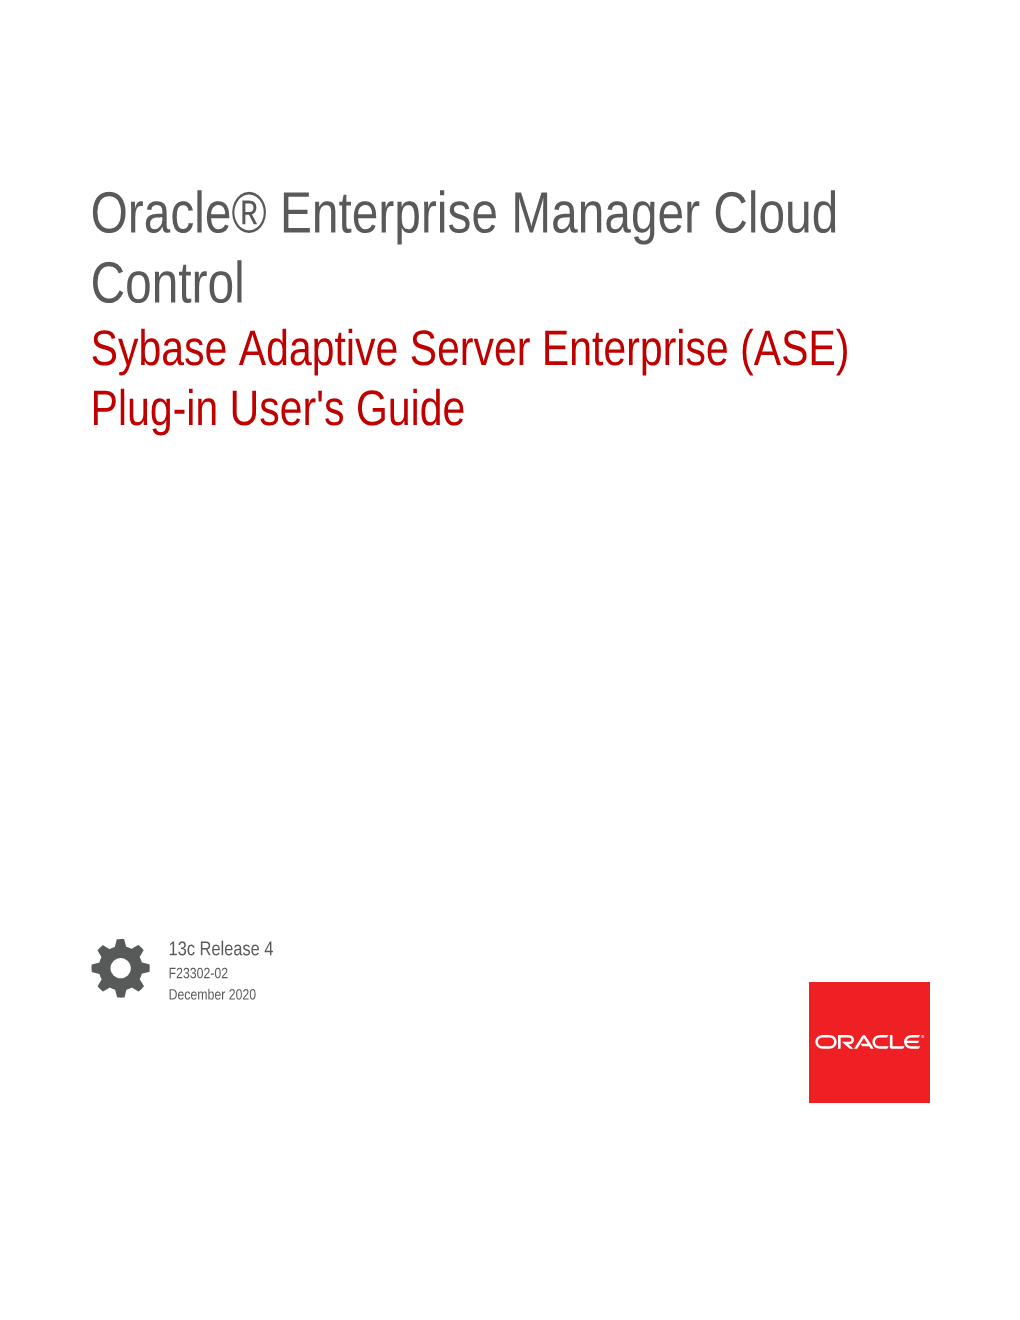 Sybase Adaptive Server Enterprise (ASE) Plug-In User's Guide